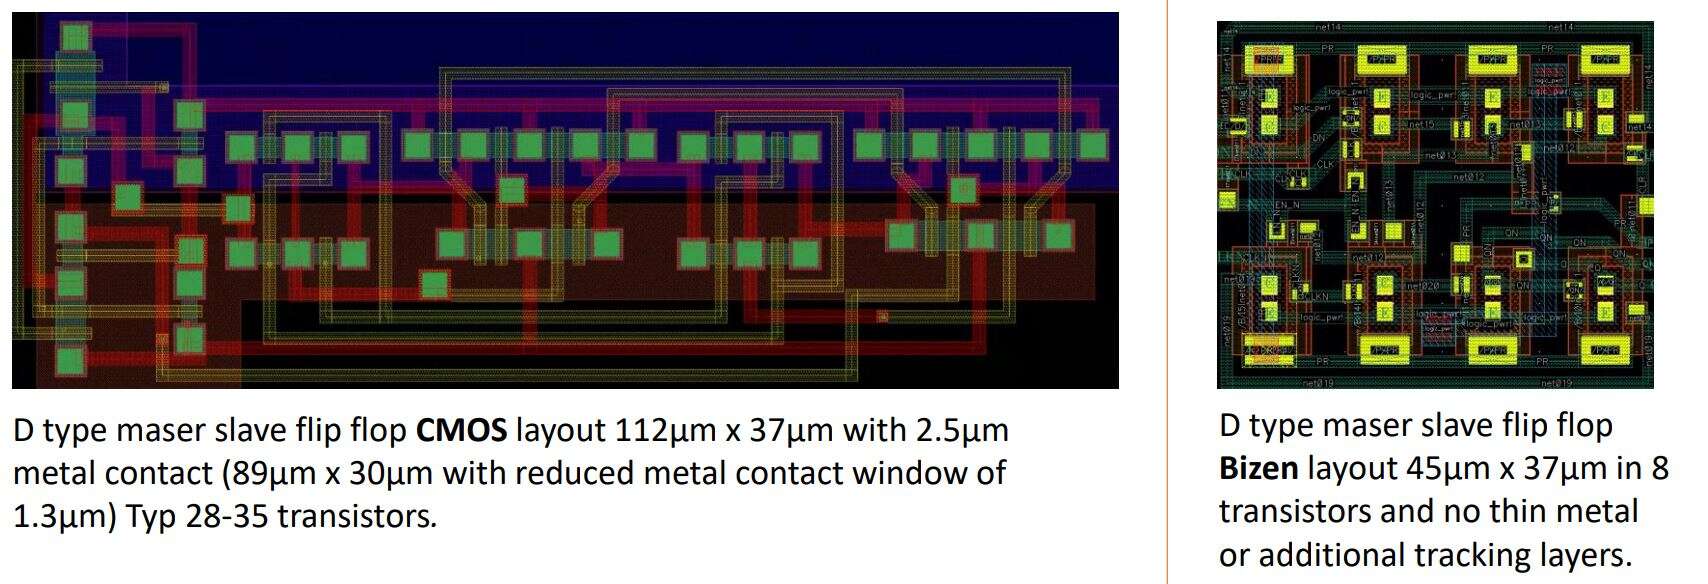 Comparison between Bizen and CMOS flip-flop circuits